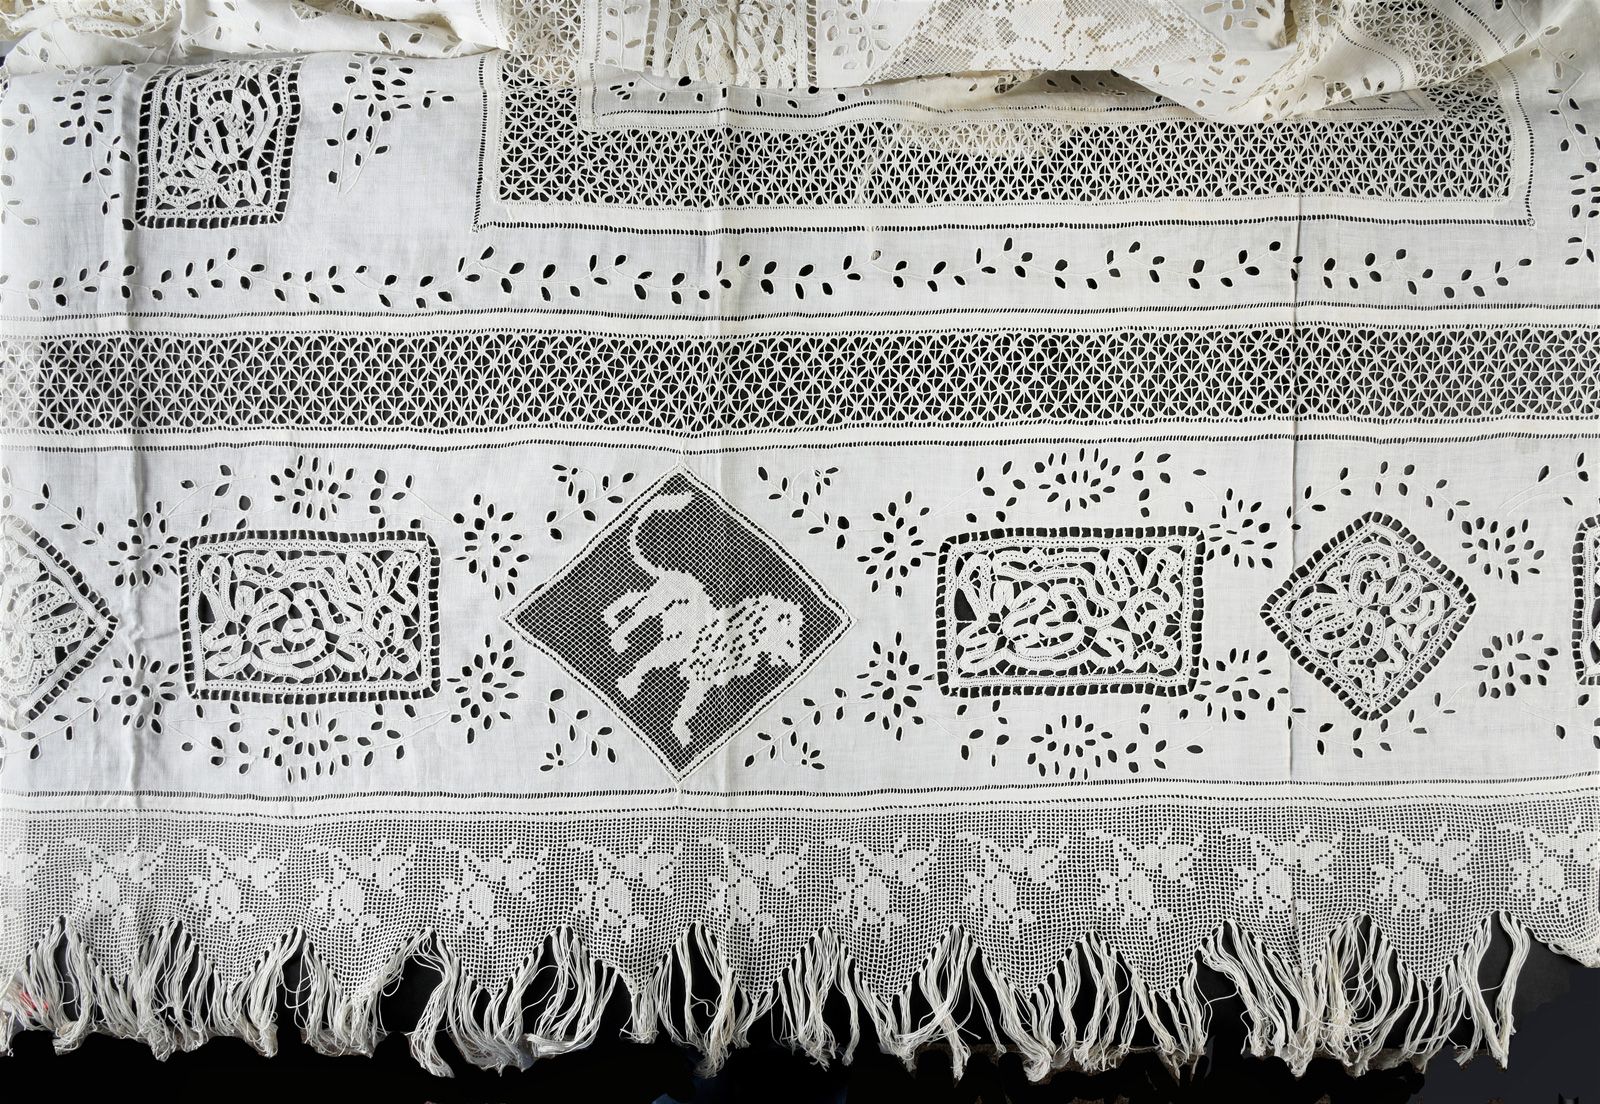 Null 绣花板，20世纪初。
绣花板上有蕾丝镶嵌和流苏，由精细的钩织边框支撑，尺寸为2.60 x 2.20米，包括流苏。(状况良好，有存放痕迹)